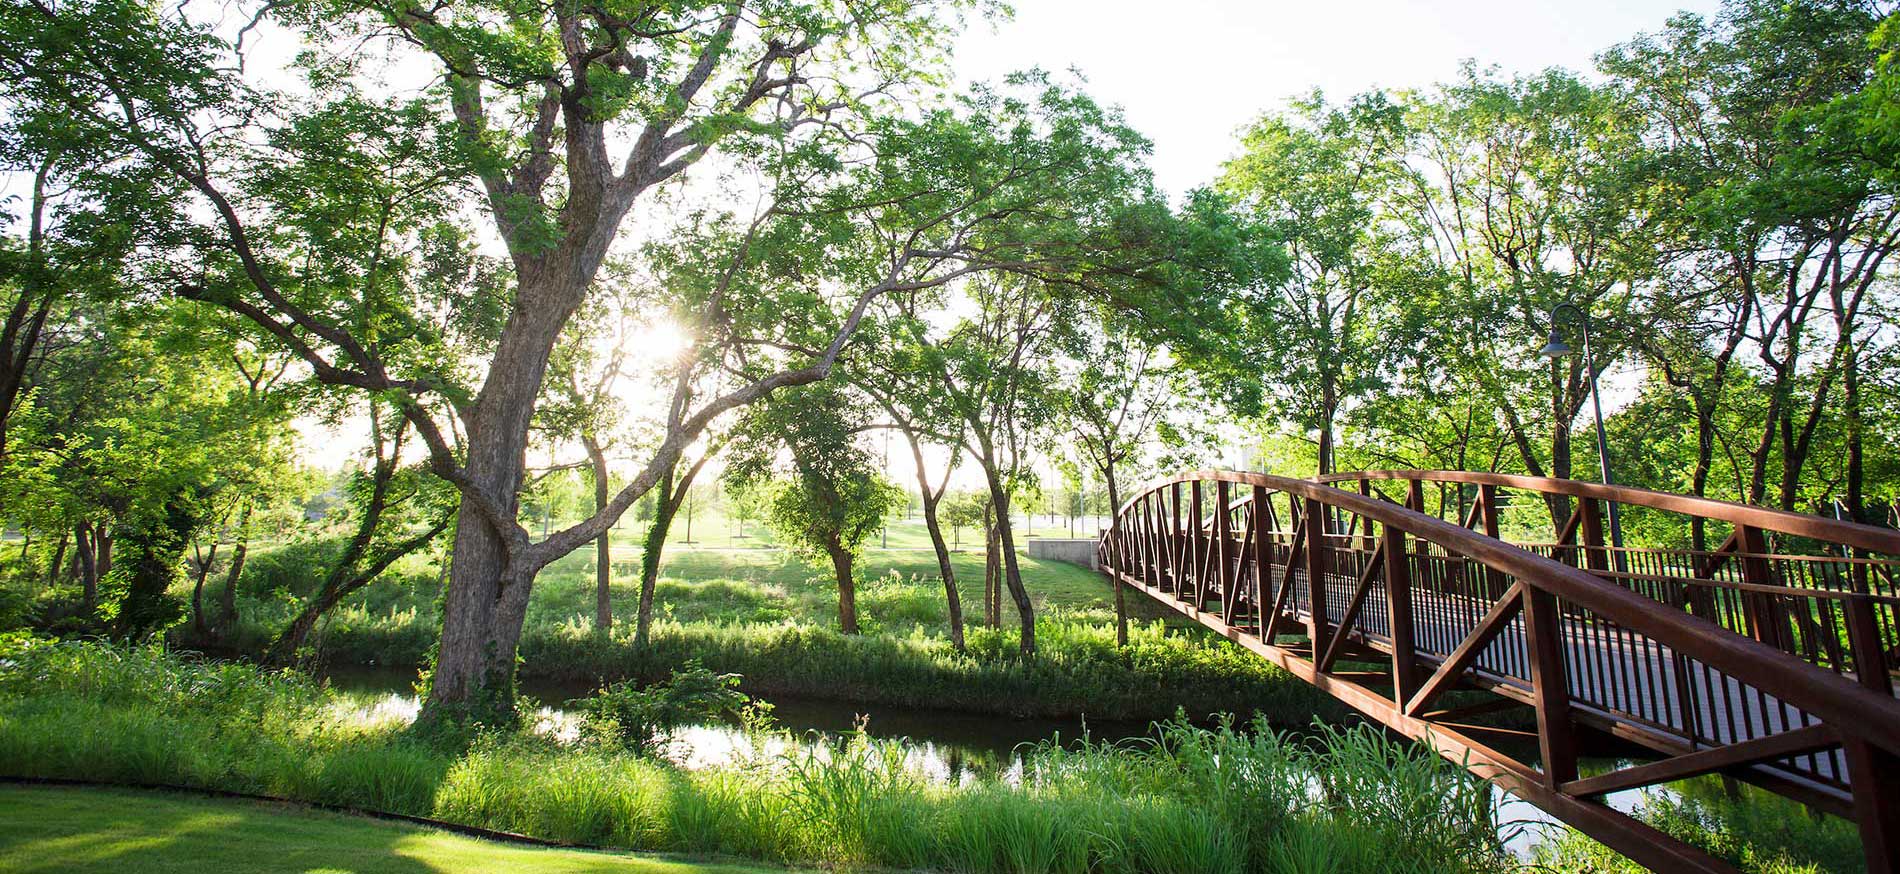 Vitruvian Park bridge with trees and sunlight